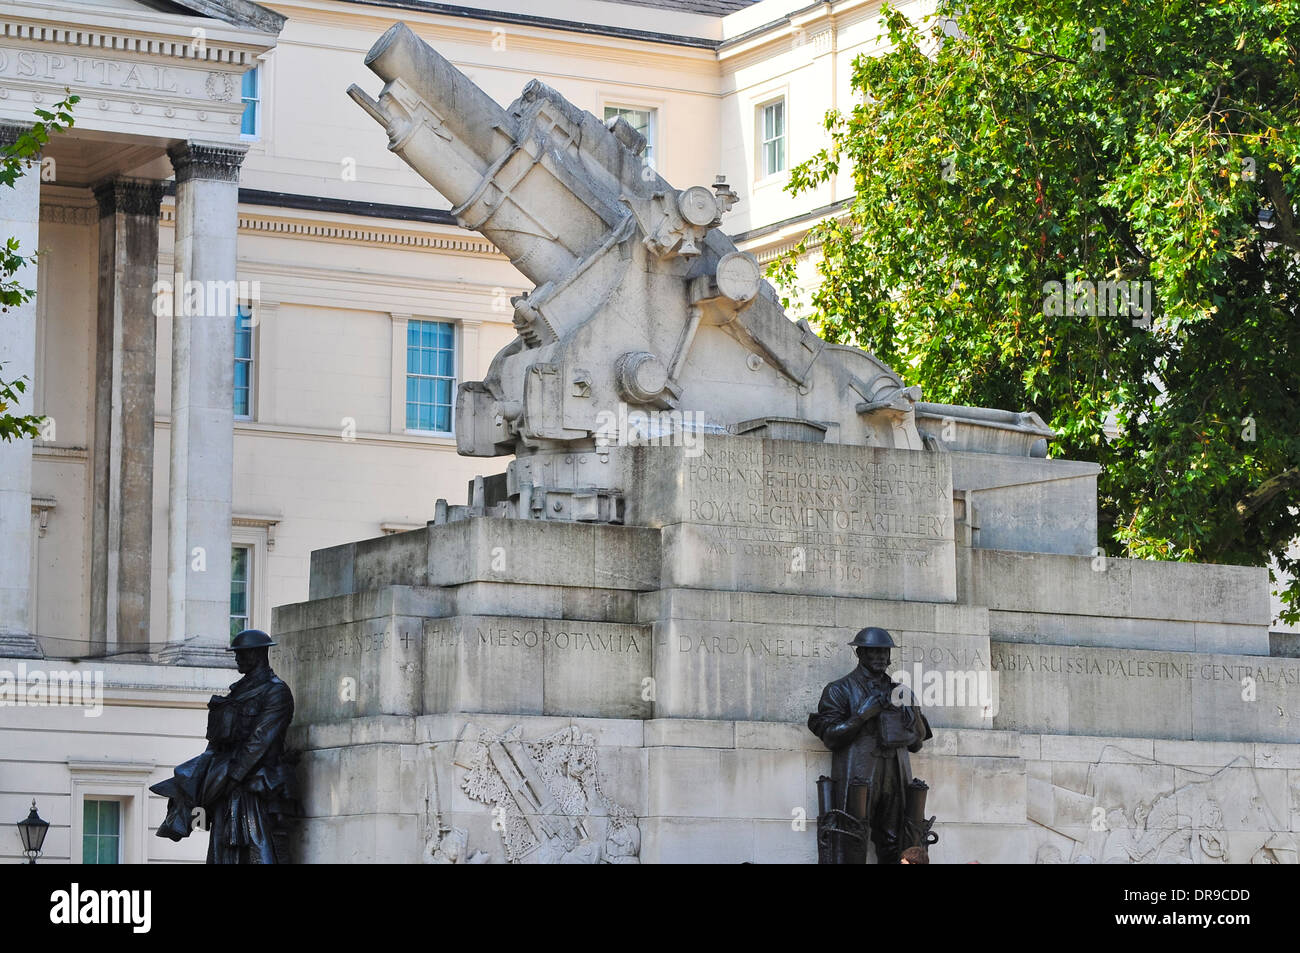 Statue at Buckingham Palace, London, UK Stock Photo